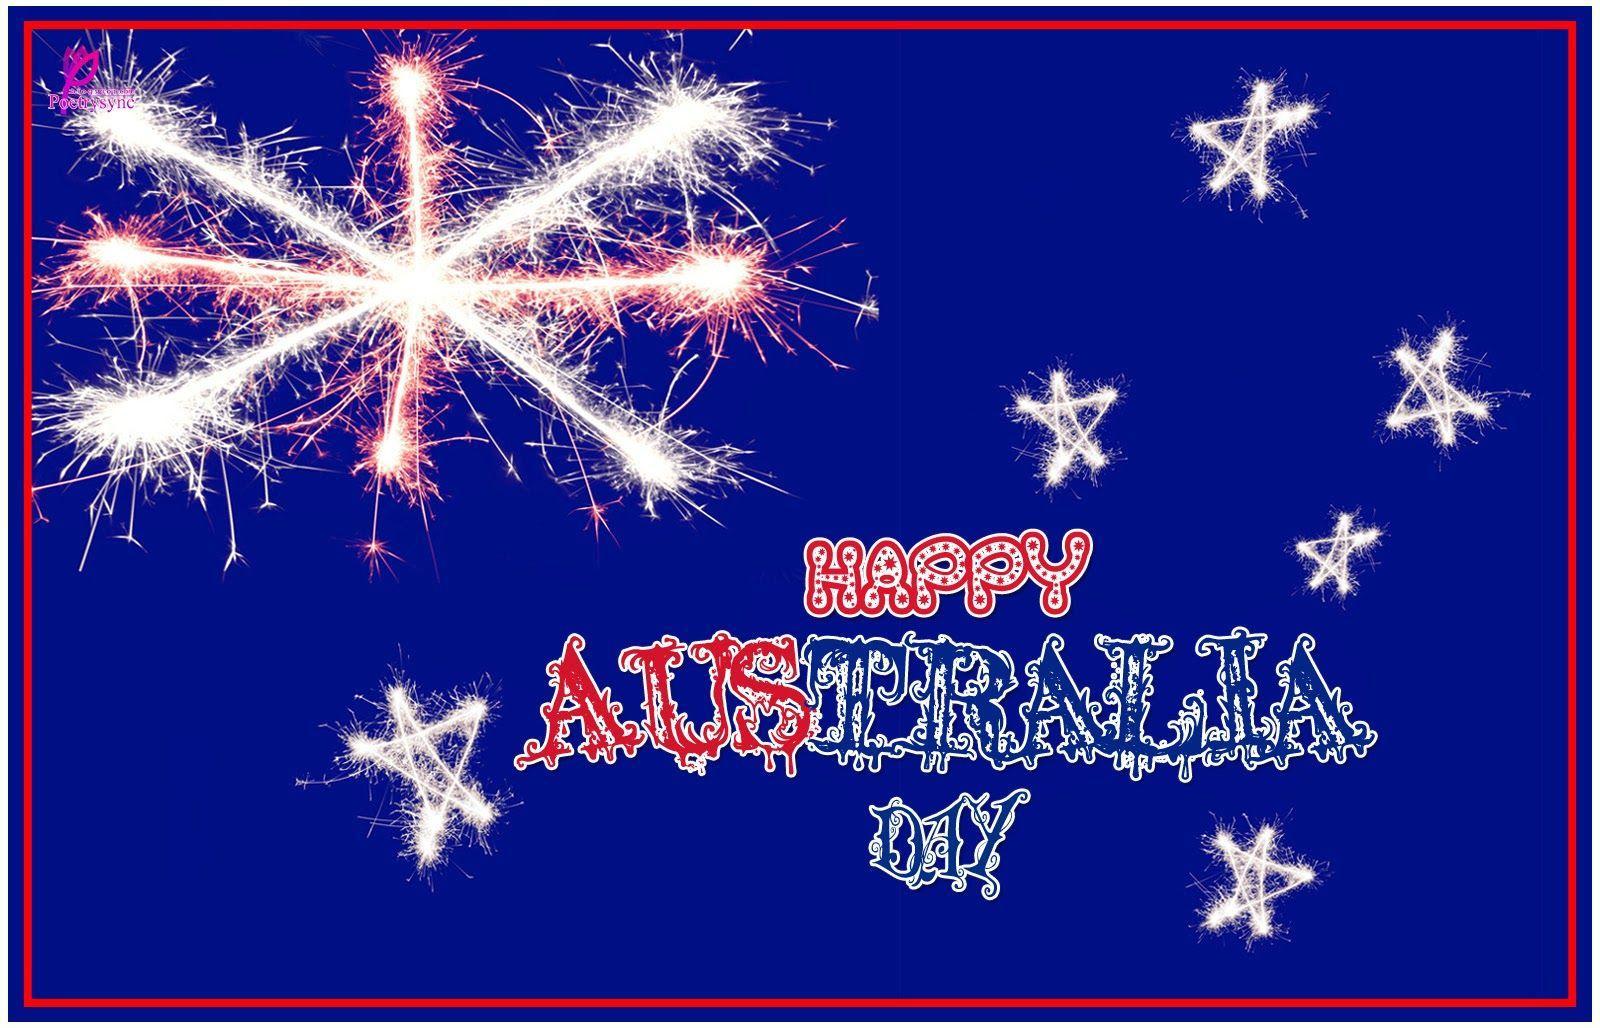 Australia Day 26 January Wishes on Australia Flag HD Wallpaper